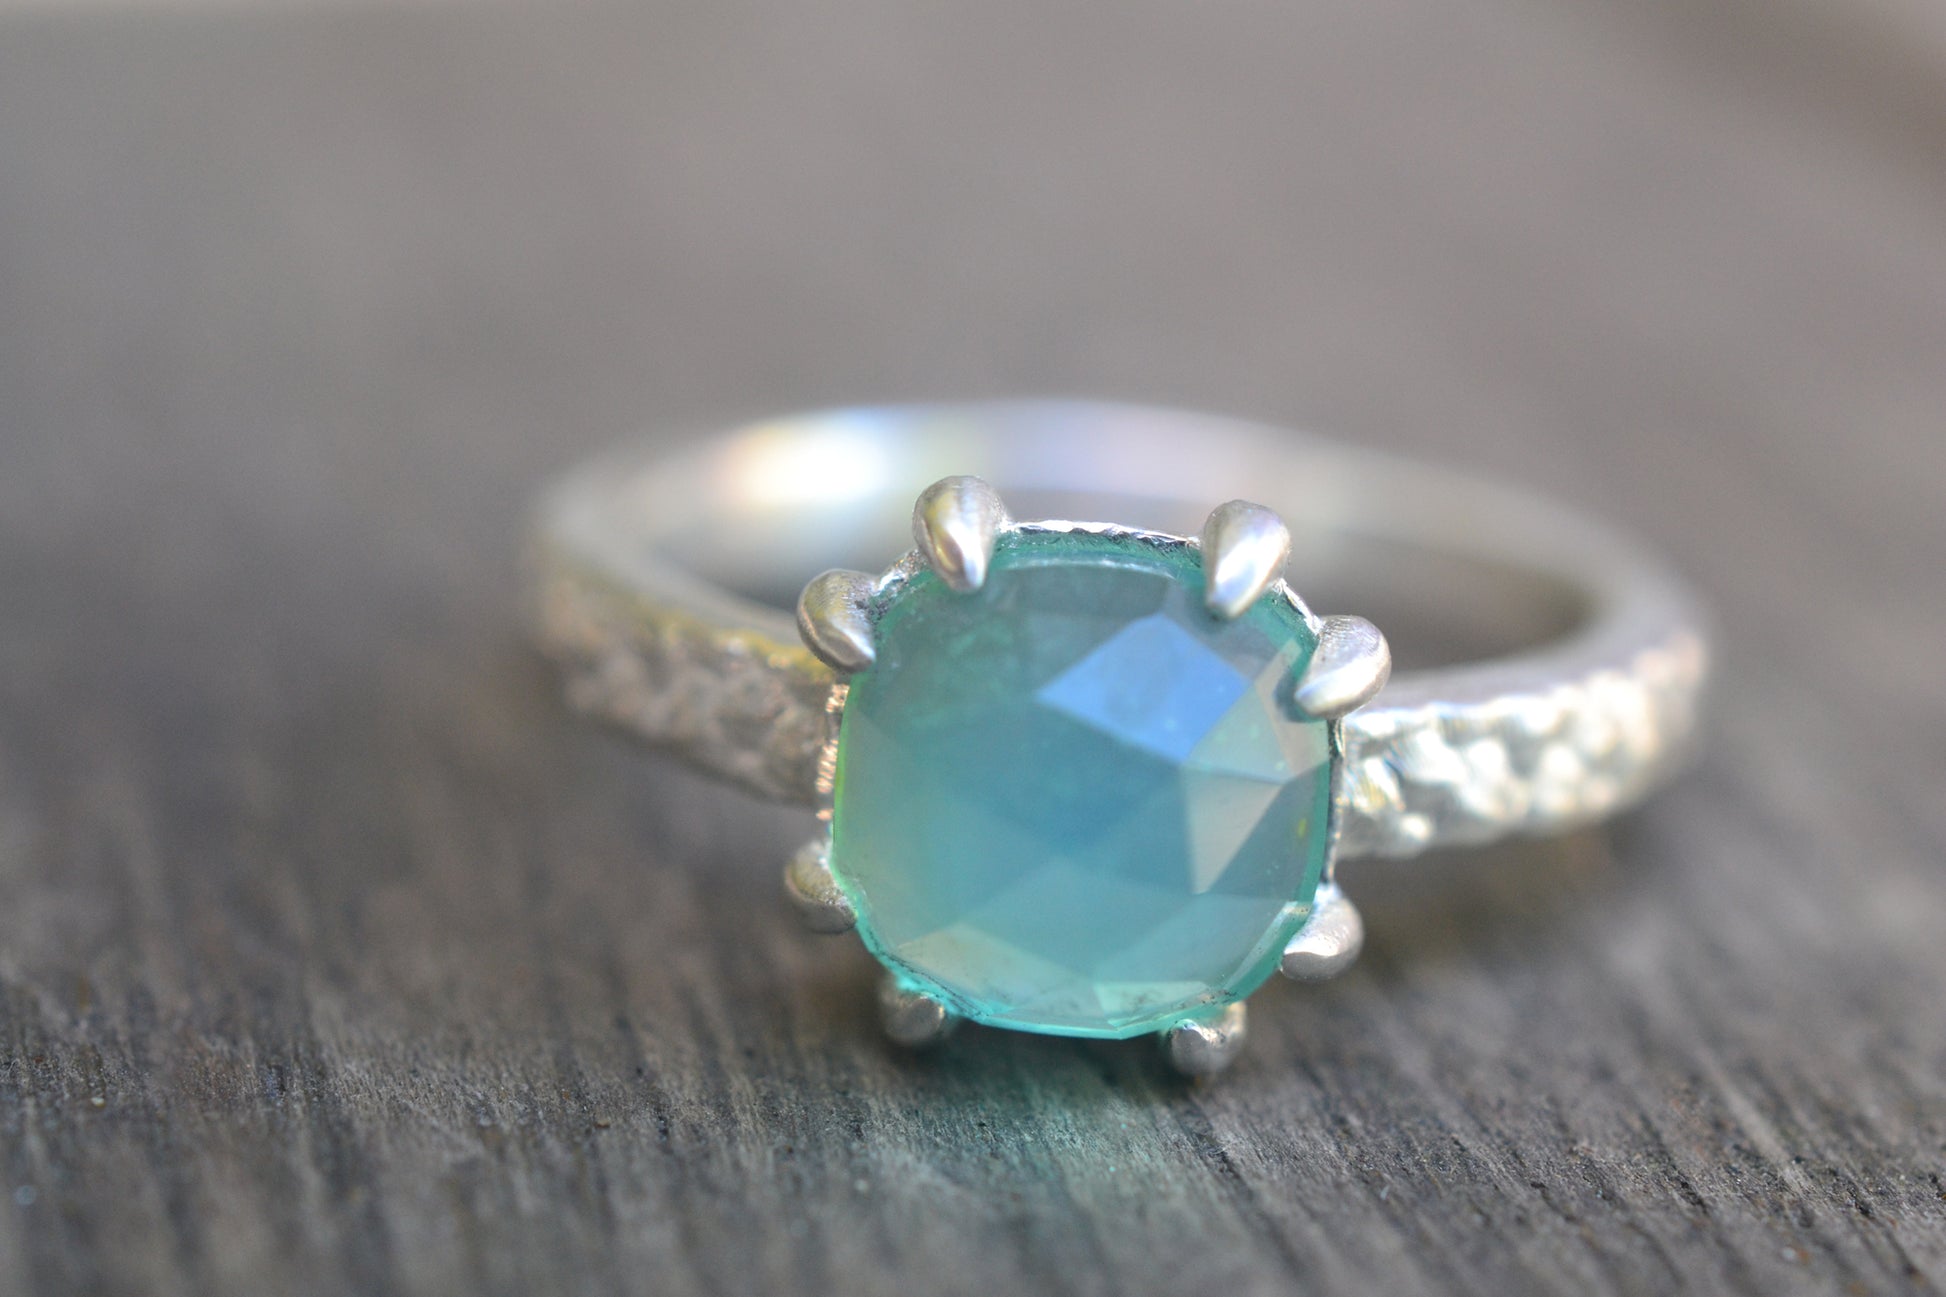 Cushion Cut Blue Opal Ring in Sterling Silver